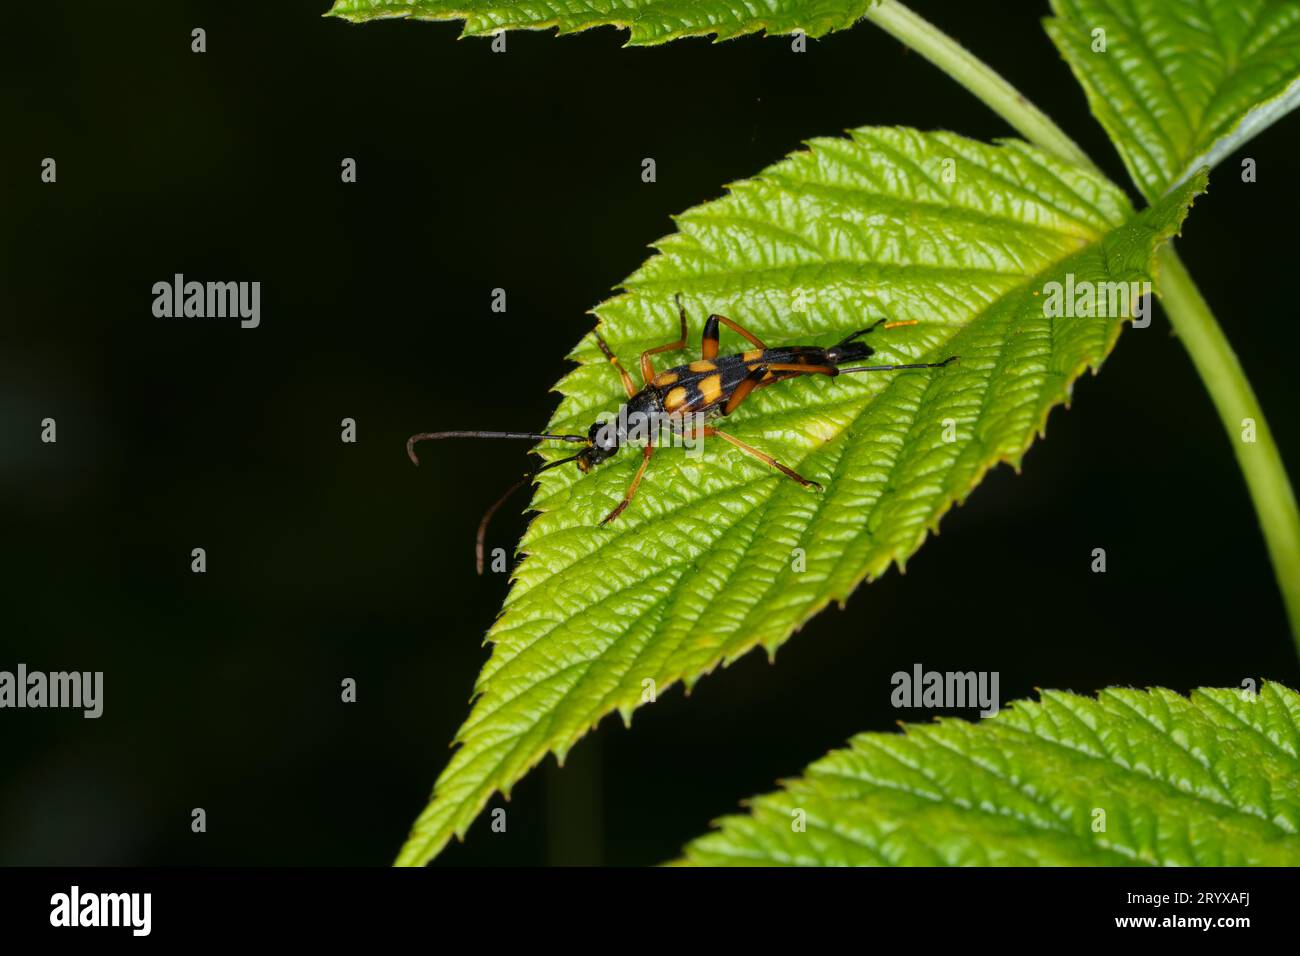 Strangalia attenuata Family Cerambycidae Genus Strangalia wild nature insect photography, picture, wallpaper Stock Photo